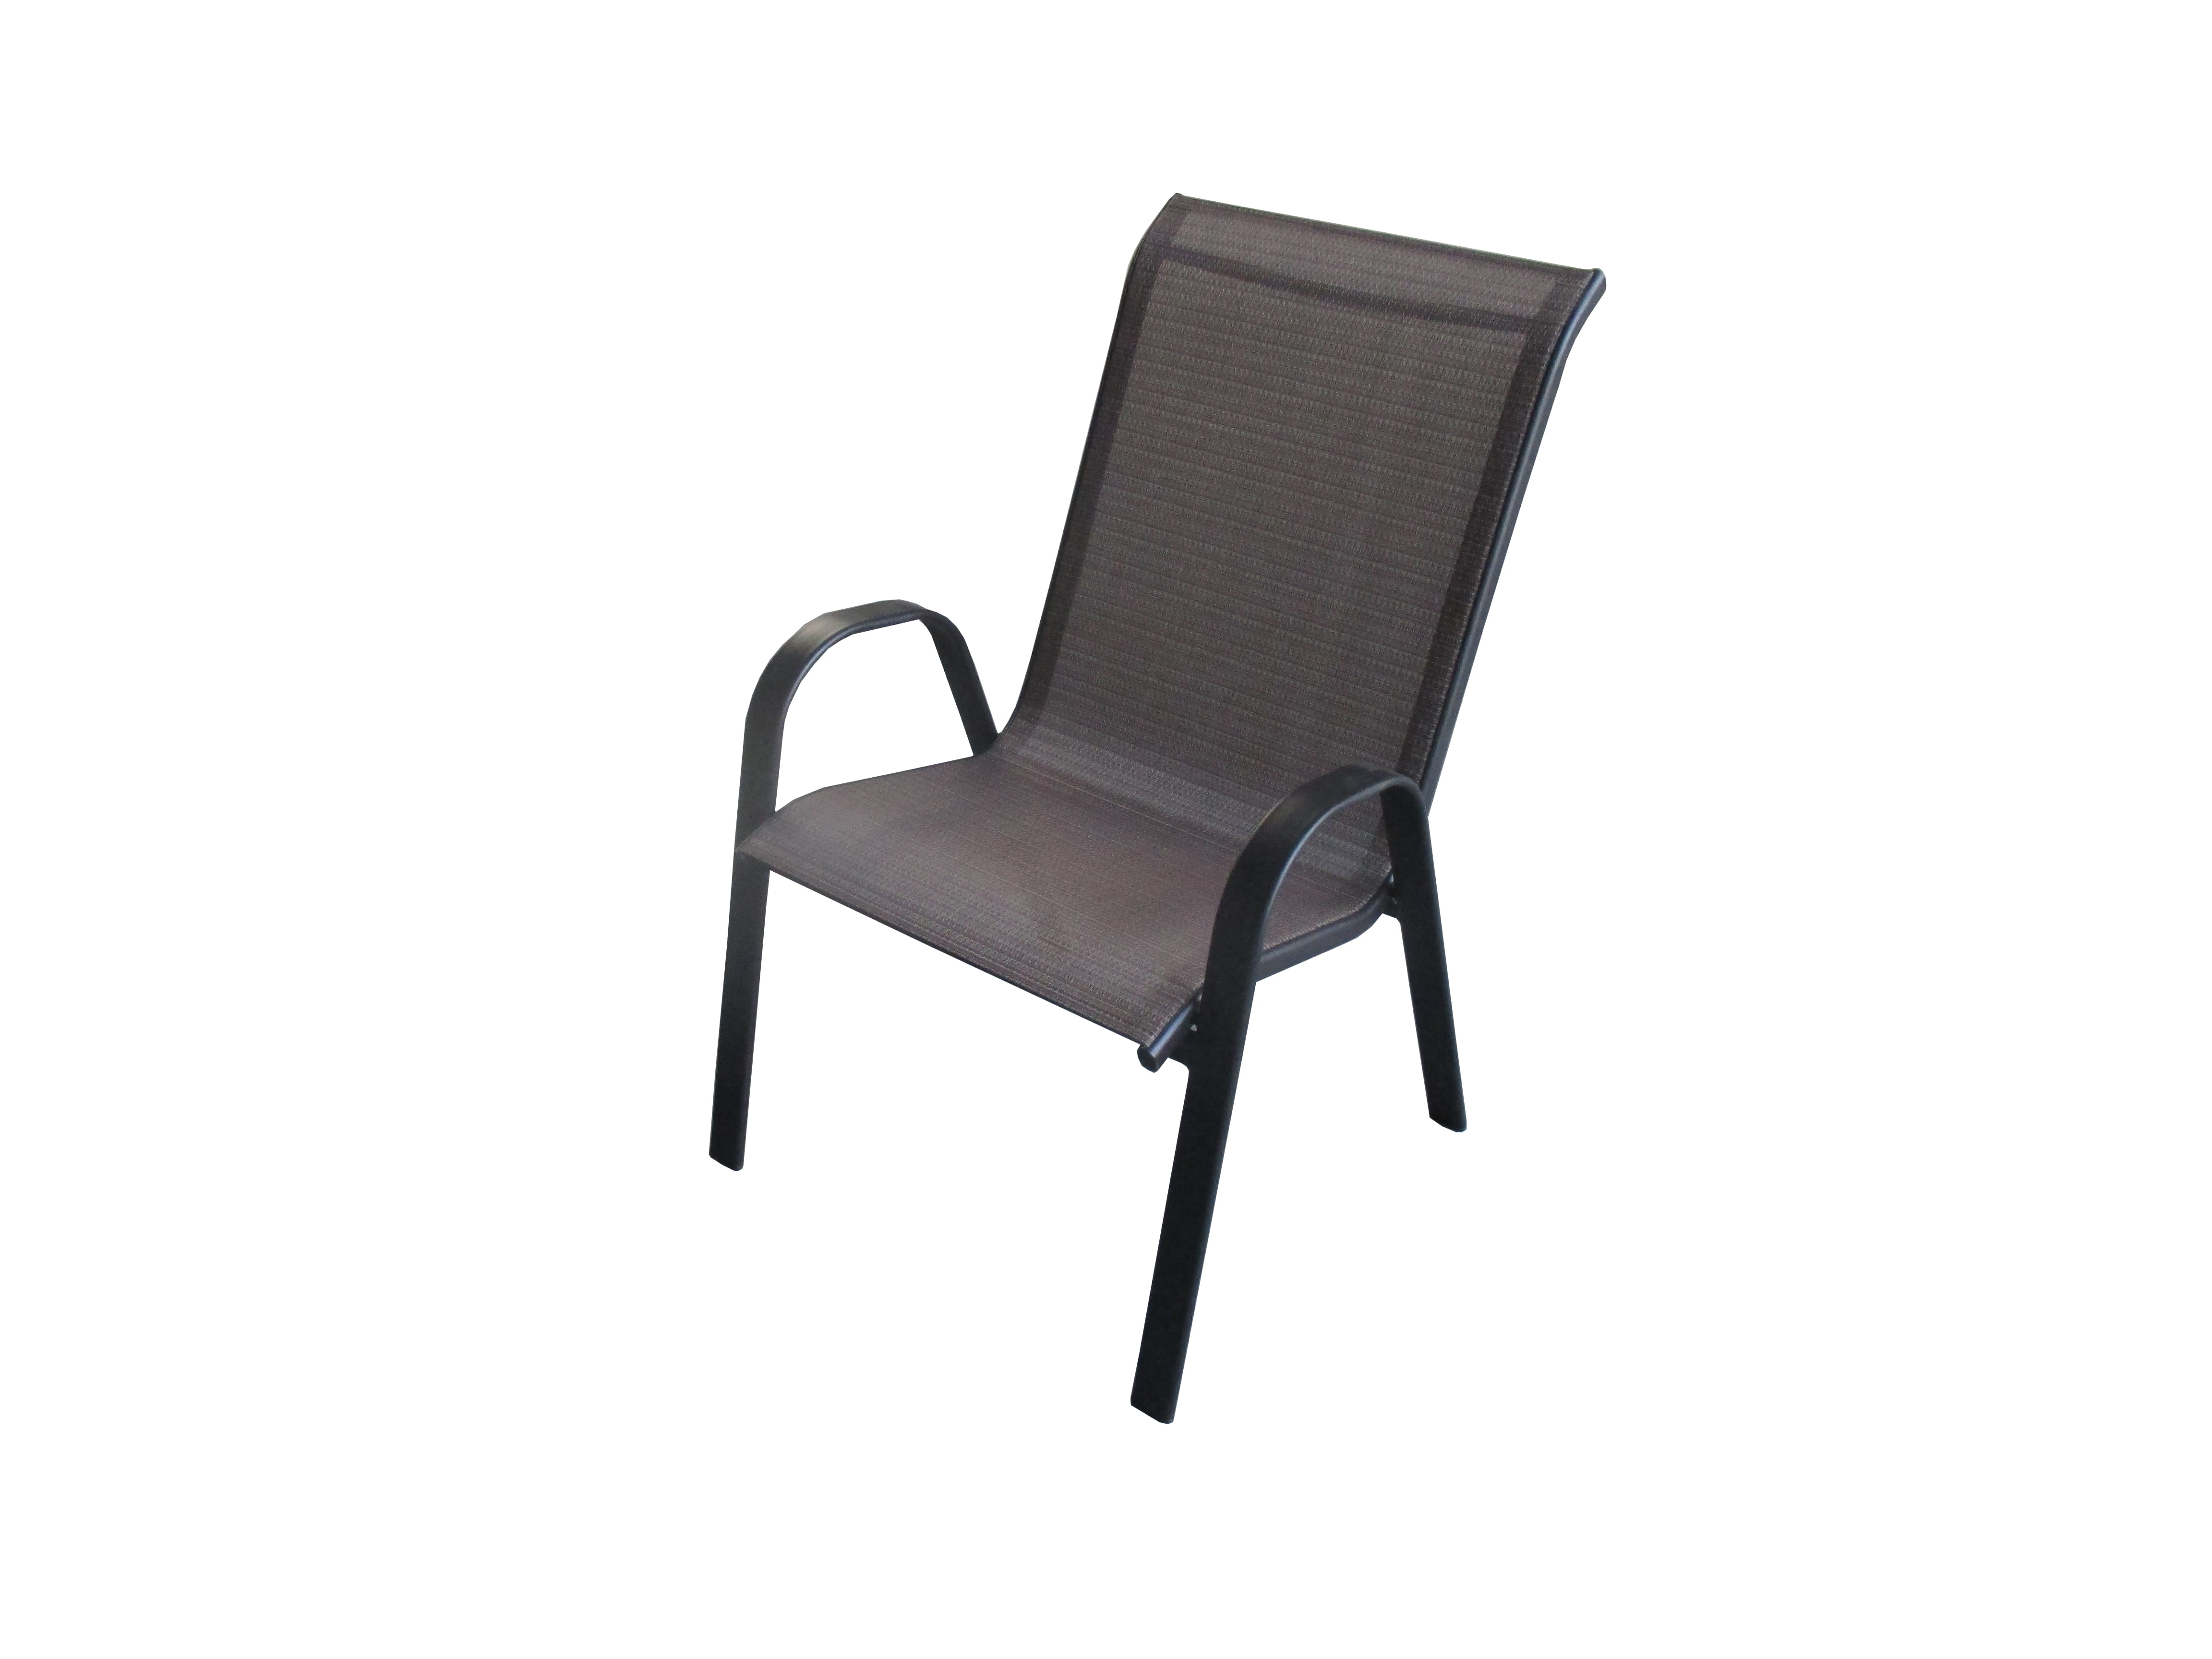 Mainstays Big & Tall Mesh Outdoor Chair, Tan